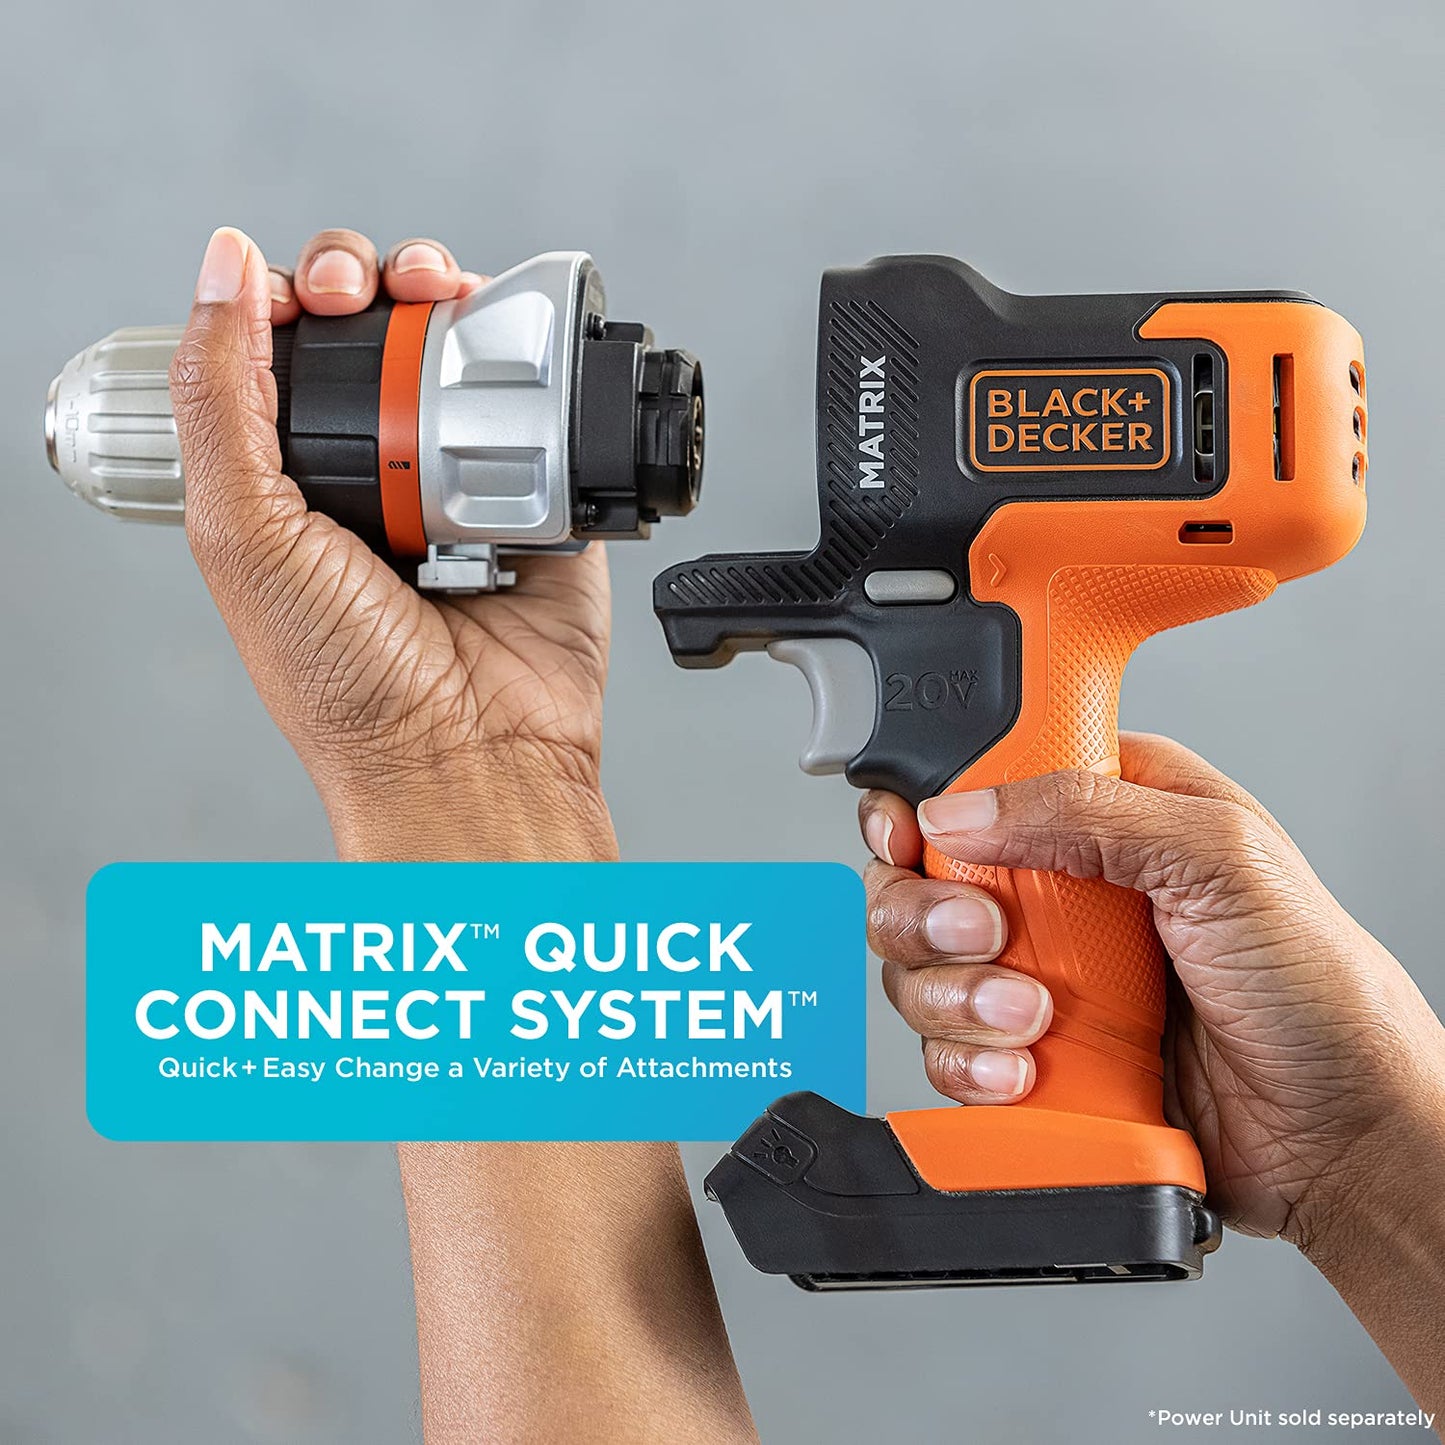 BLACK+DECKER 20V MAX Matrix Cordless Drill/Driver (BDCDMT120C), Drill Kit (Orange)